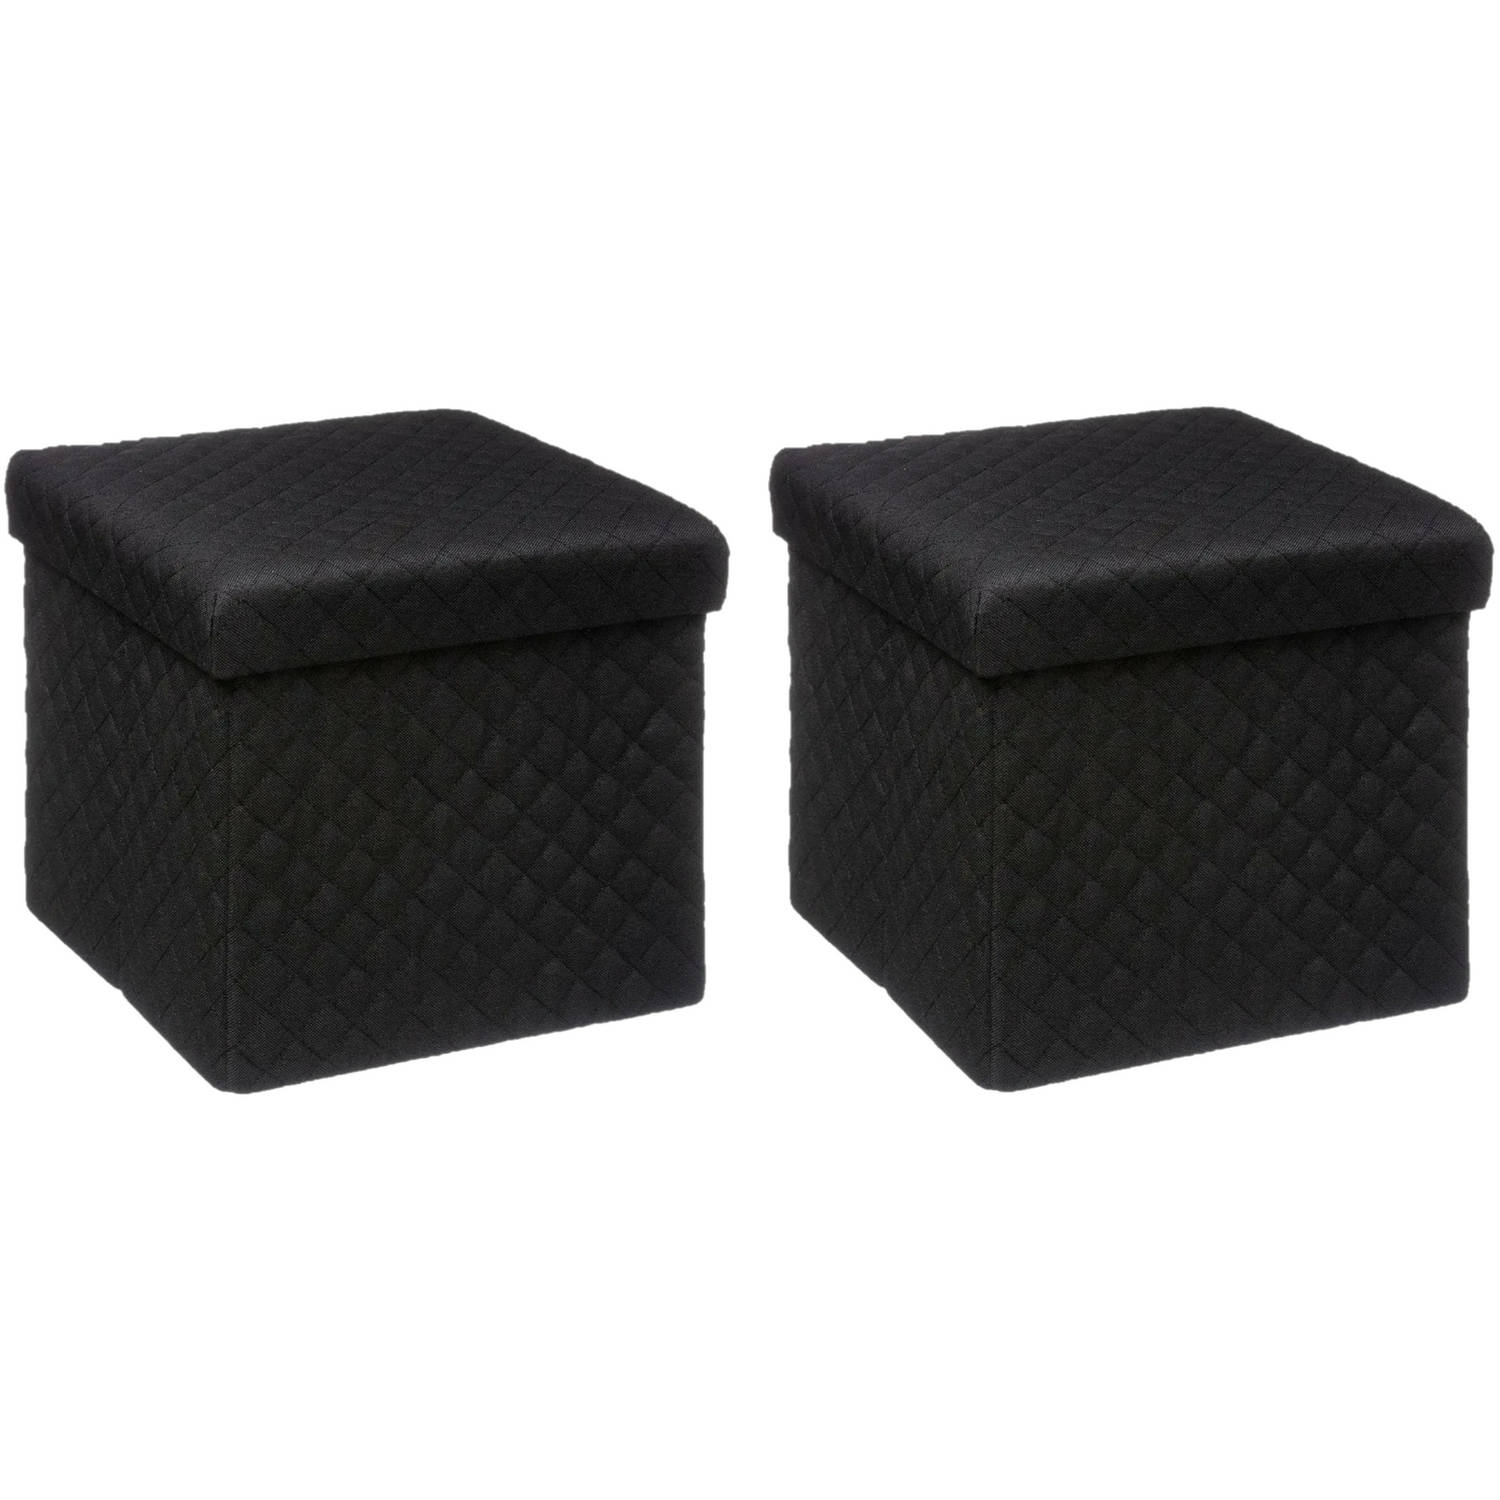 5Five Poef-Hocker-opbergbox 2x zwart polyester-mdf 31 x 31 cm Opbergbox